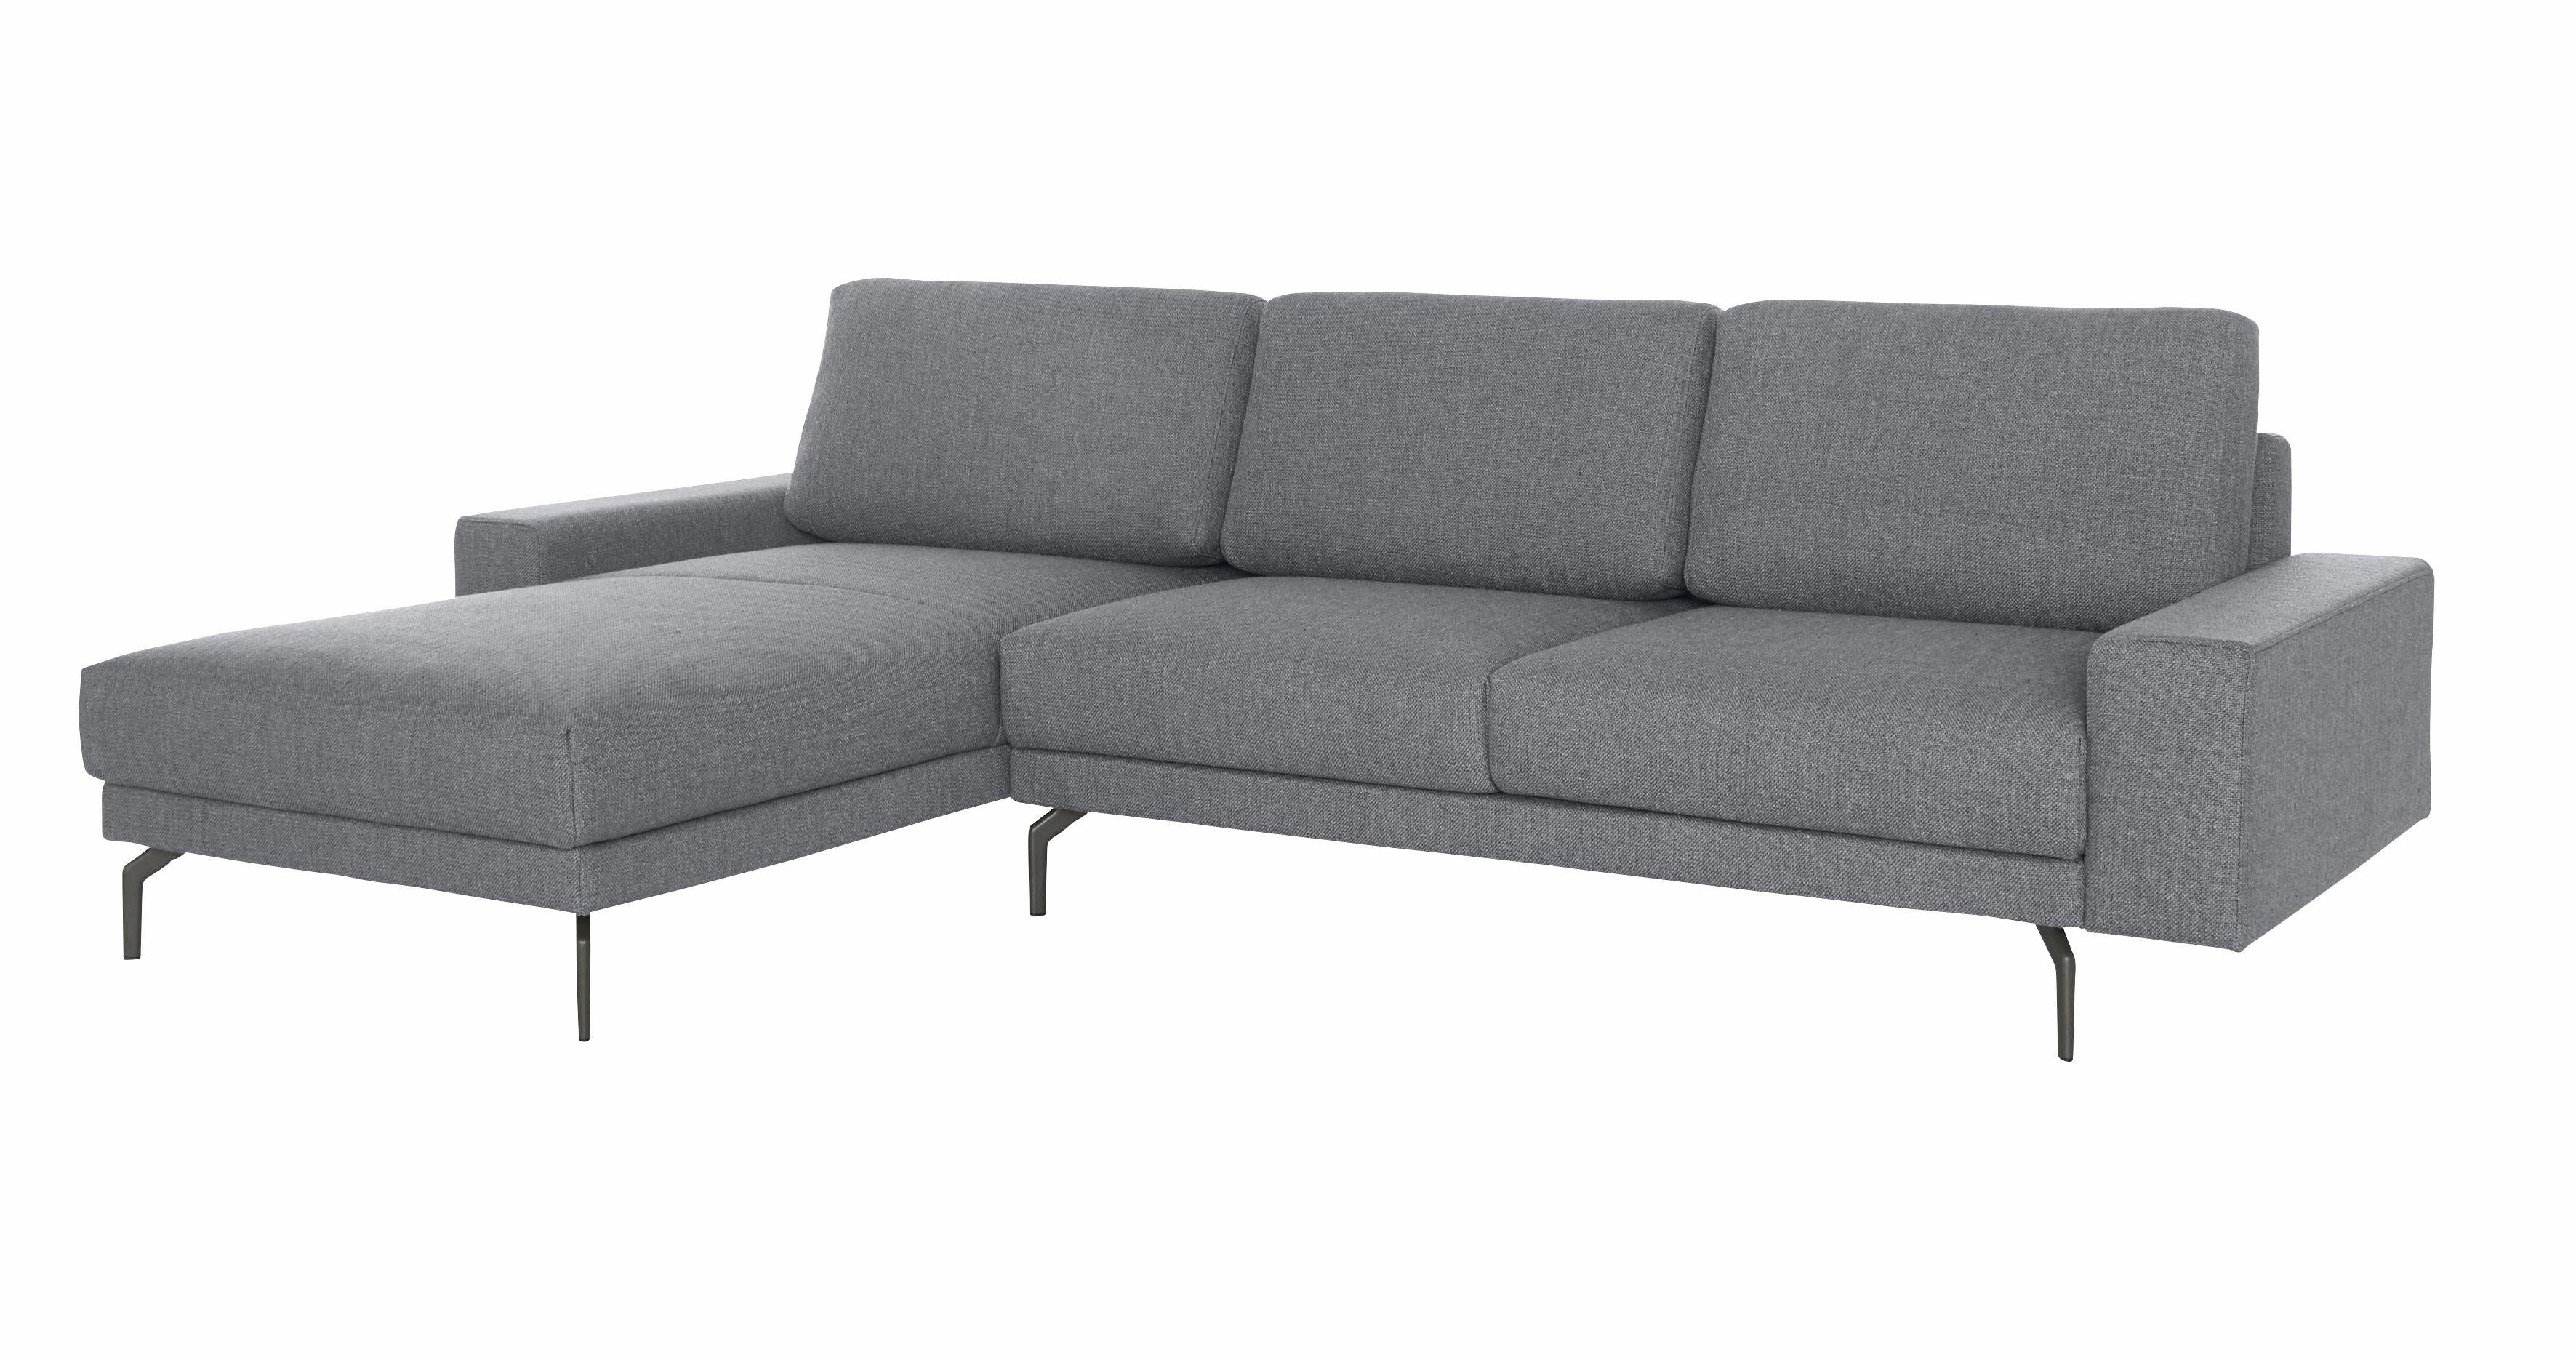 hülsta sofa Ecksofa hs.450, Armlehne breit und niedrig, Alugussfüße in umbragrau, Breite 294 cm